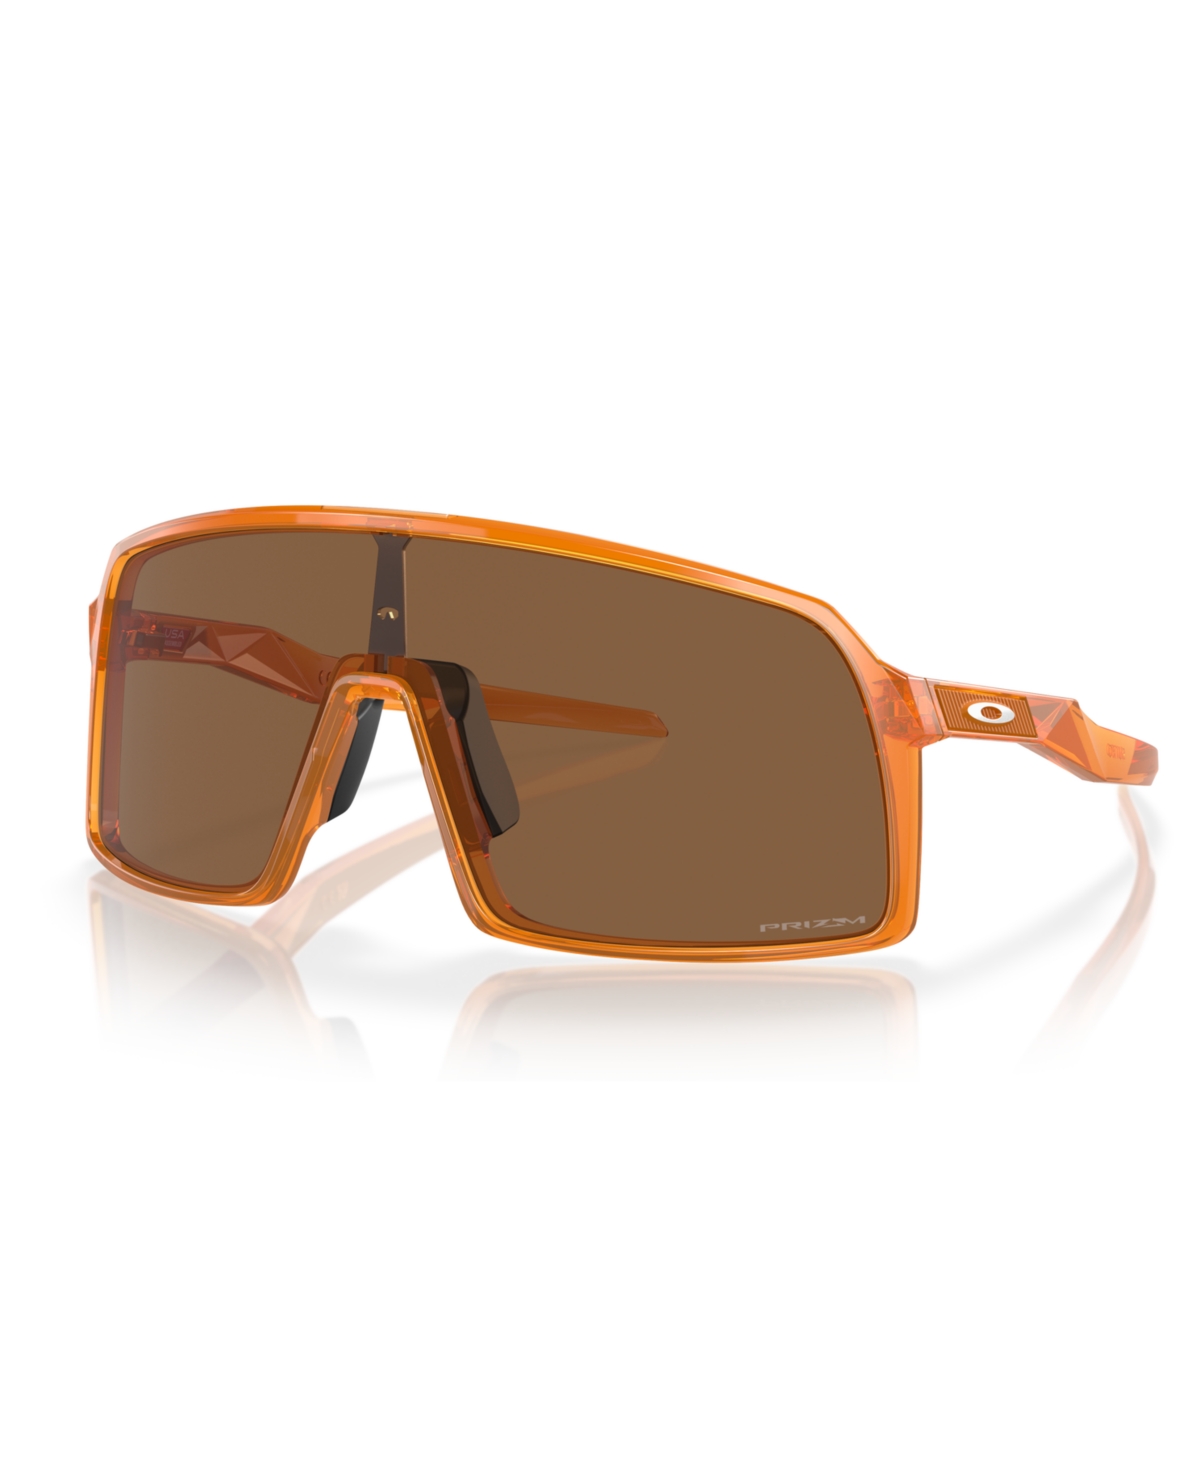 Oakley Men's Sunglasses, Oo9406 37 In Transparent Ginger